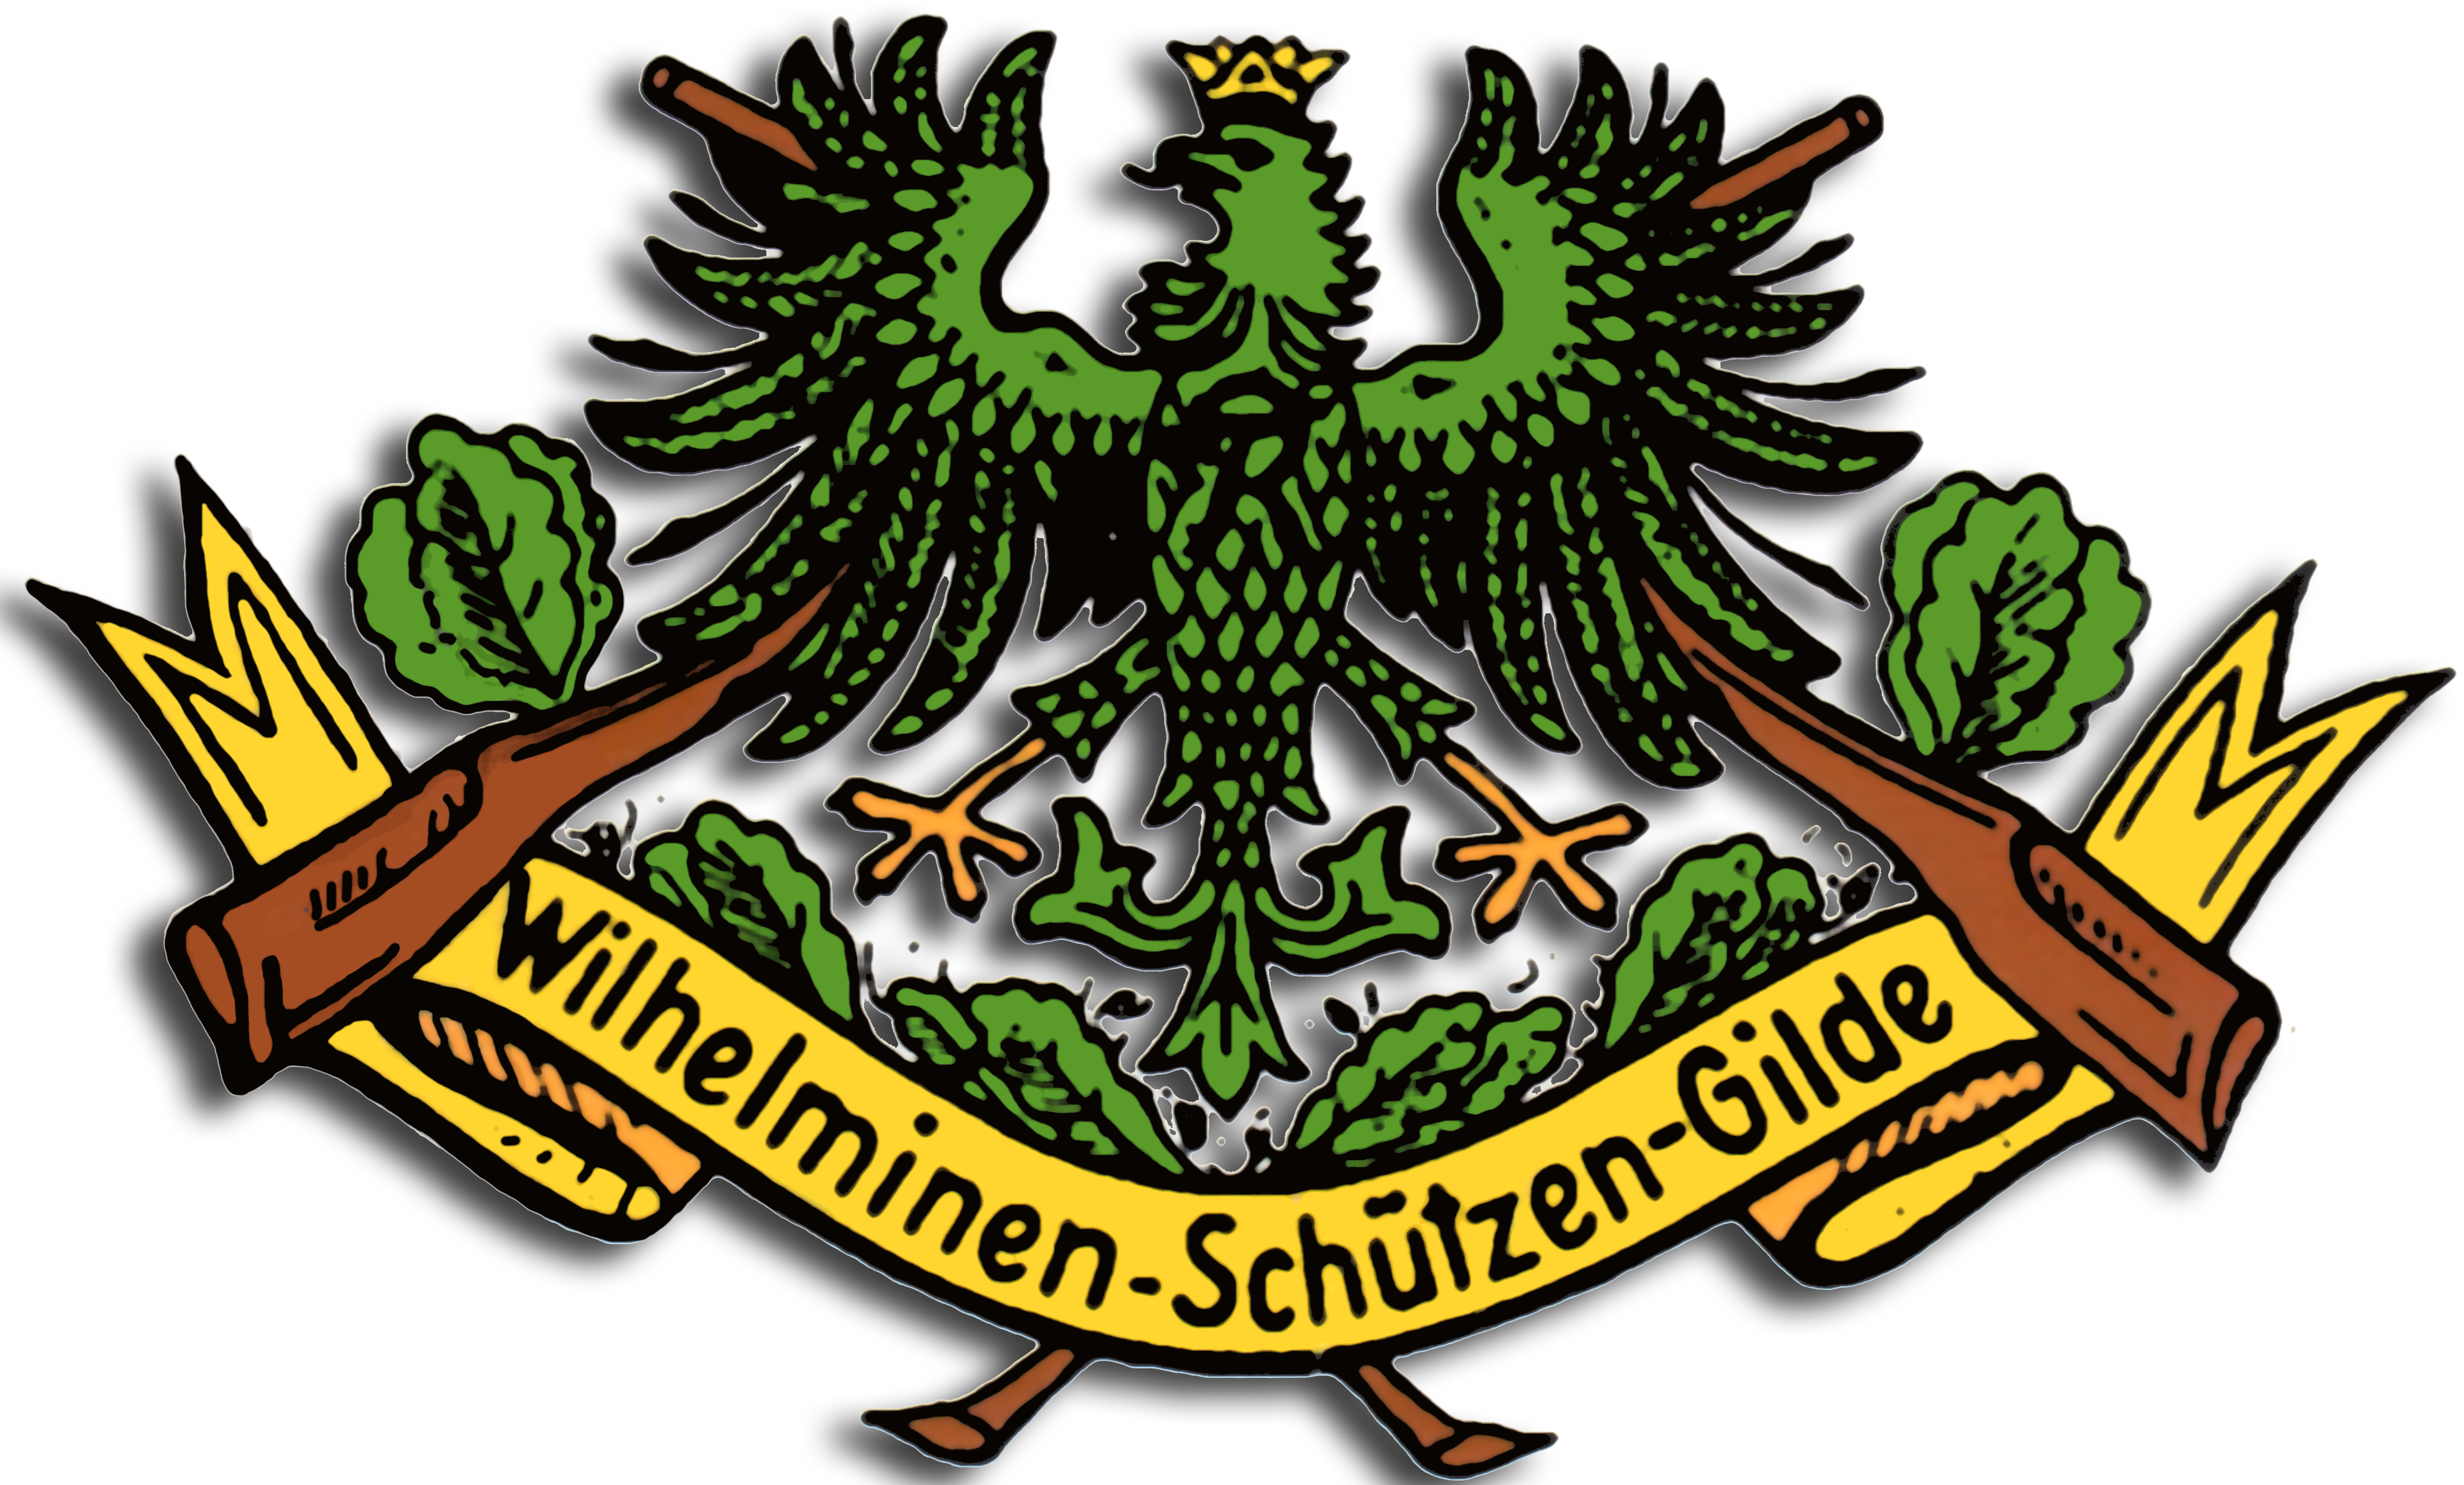 Wilhelminen-Schützen-Gilde v. 1831 e.V.